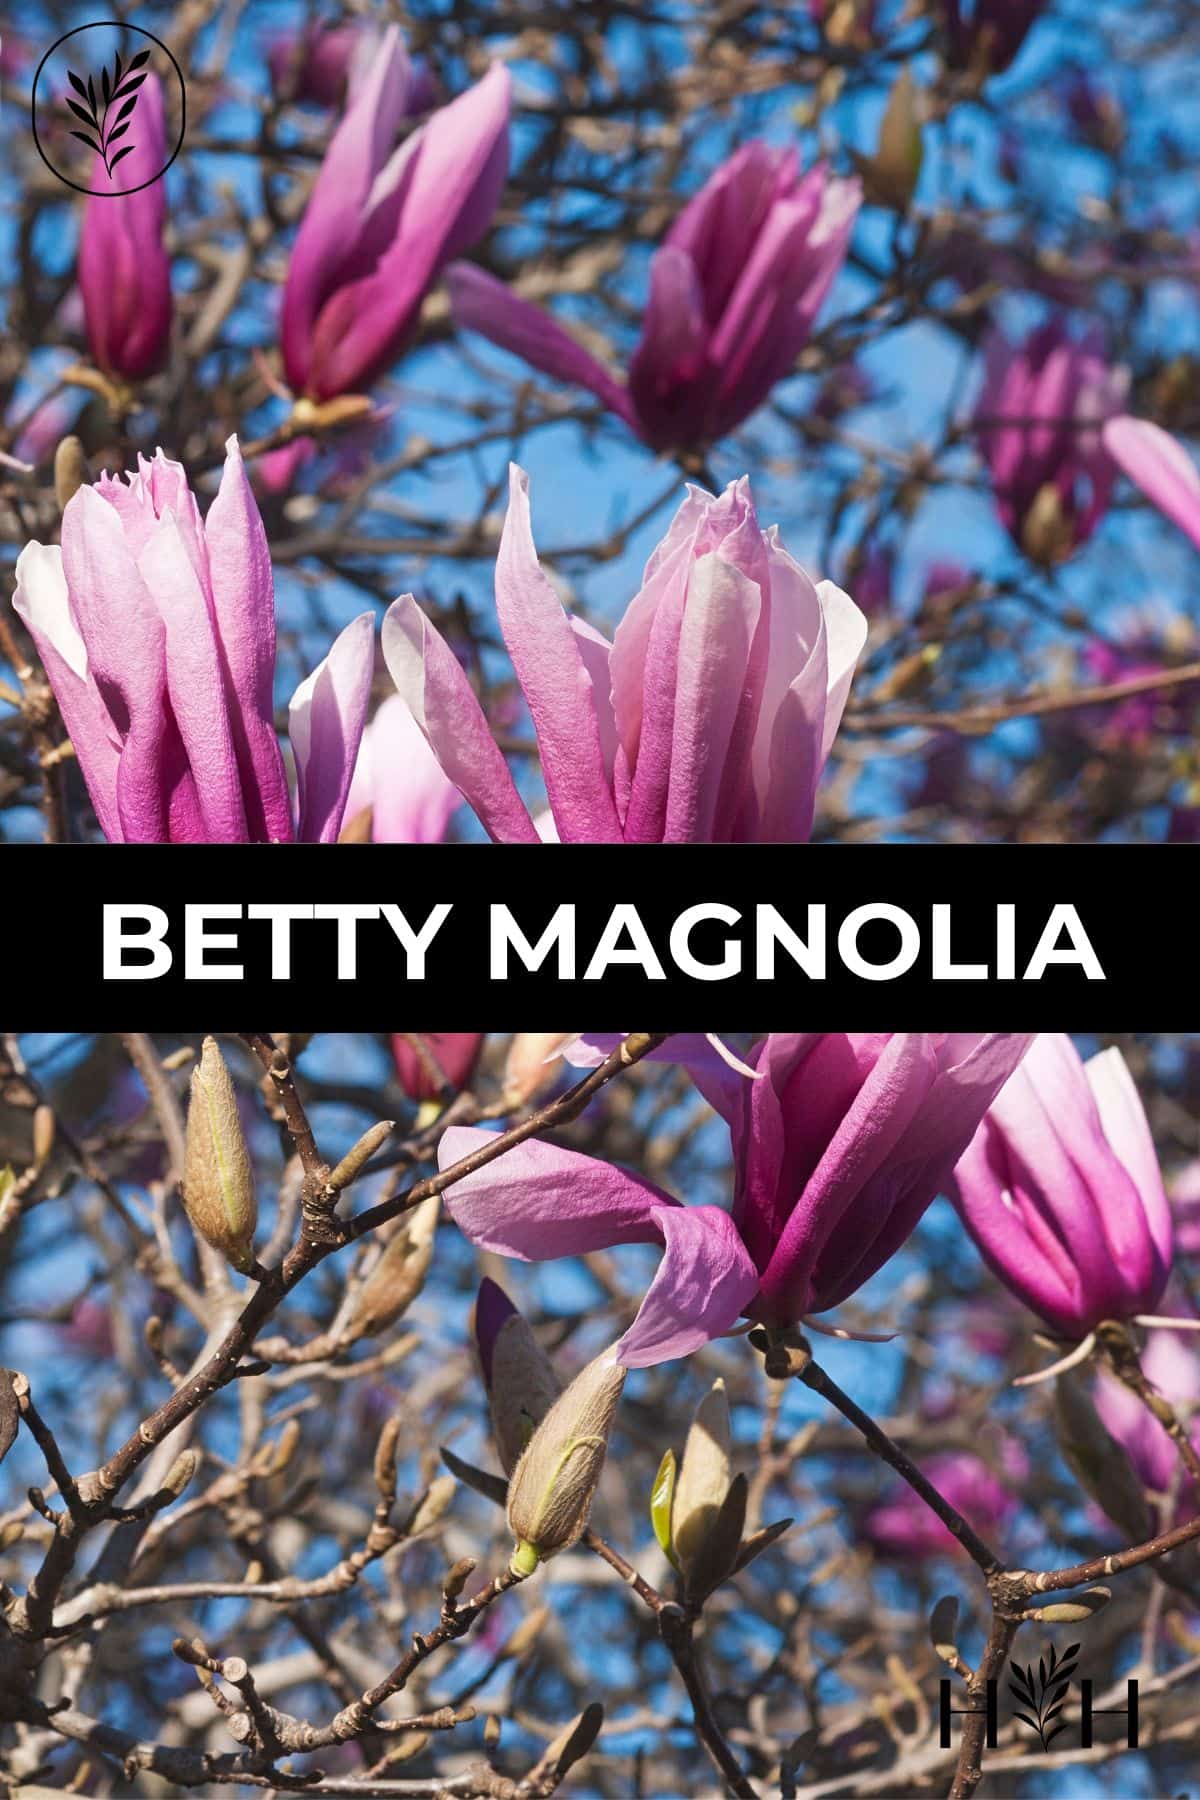 Betty magnolia via @home4theharvest